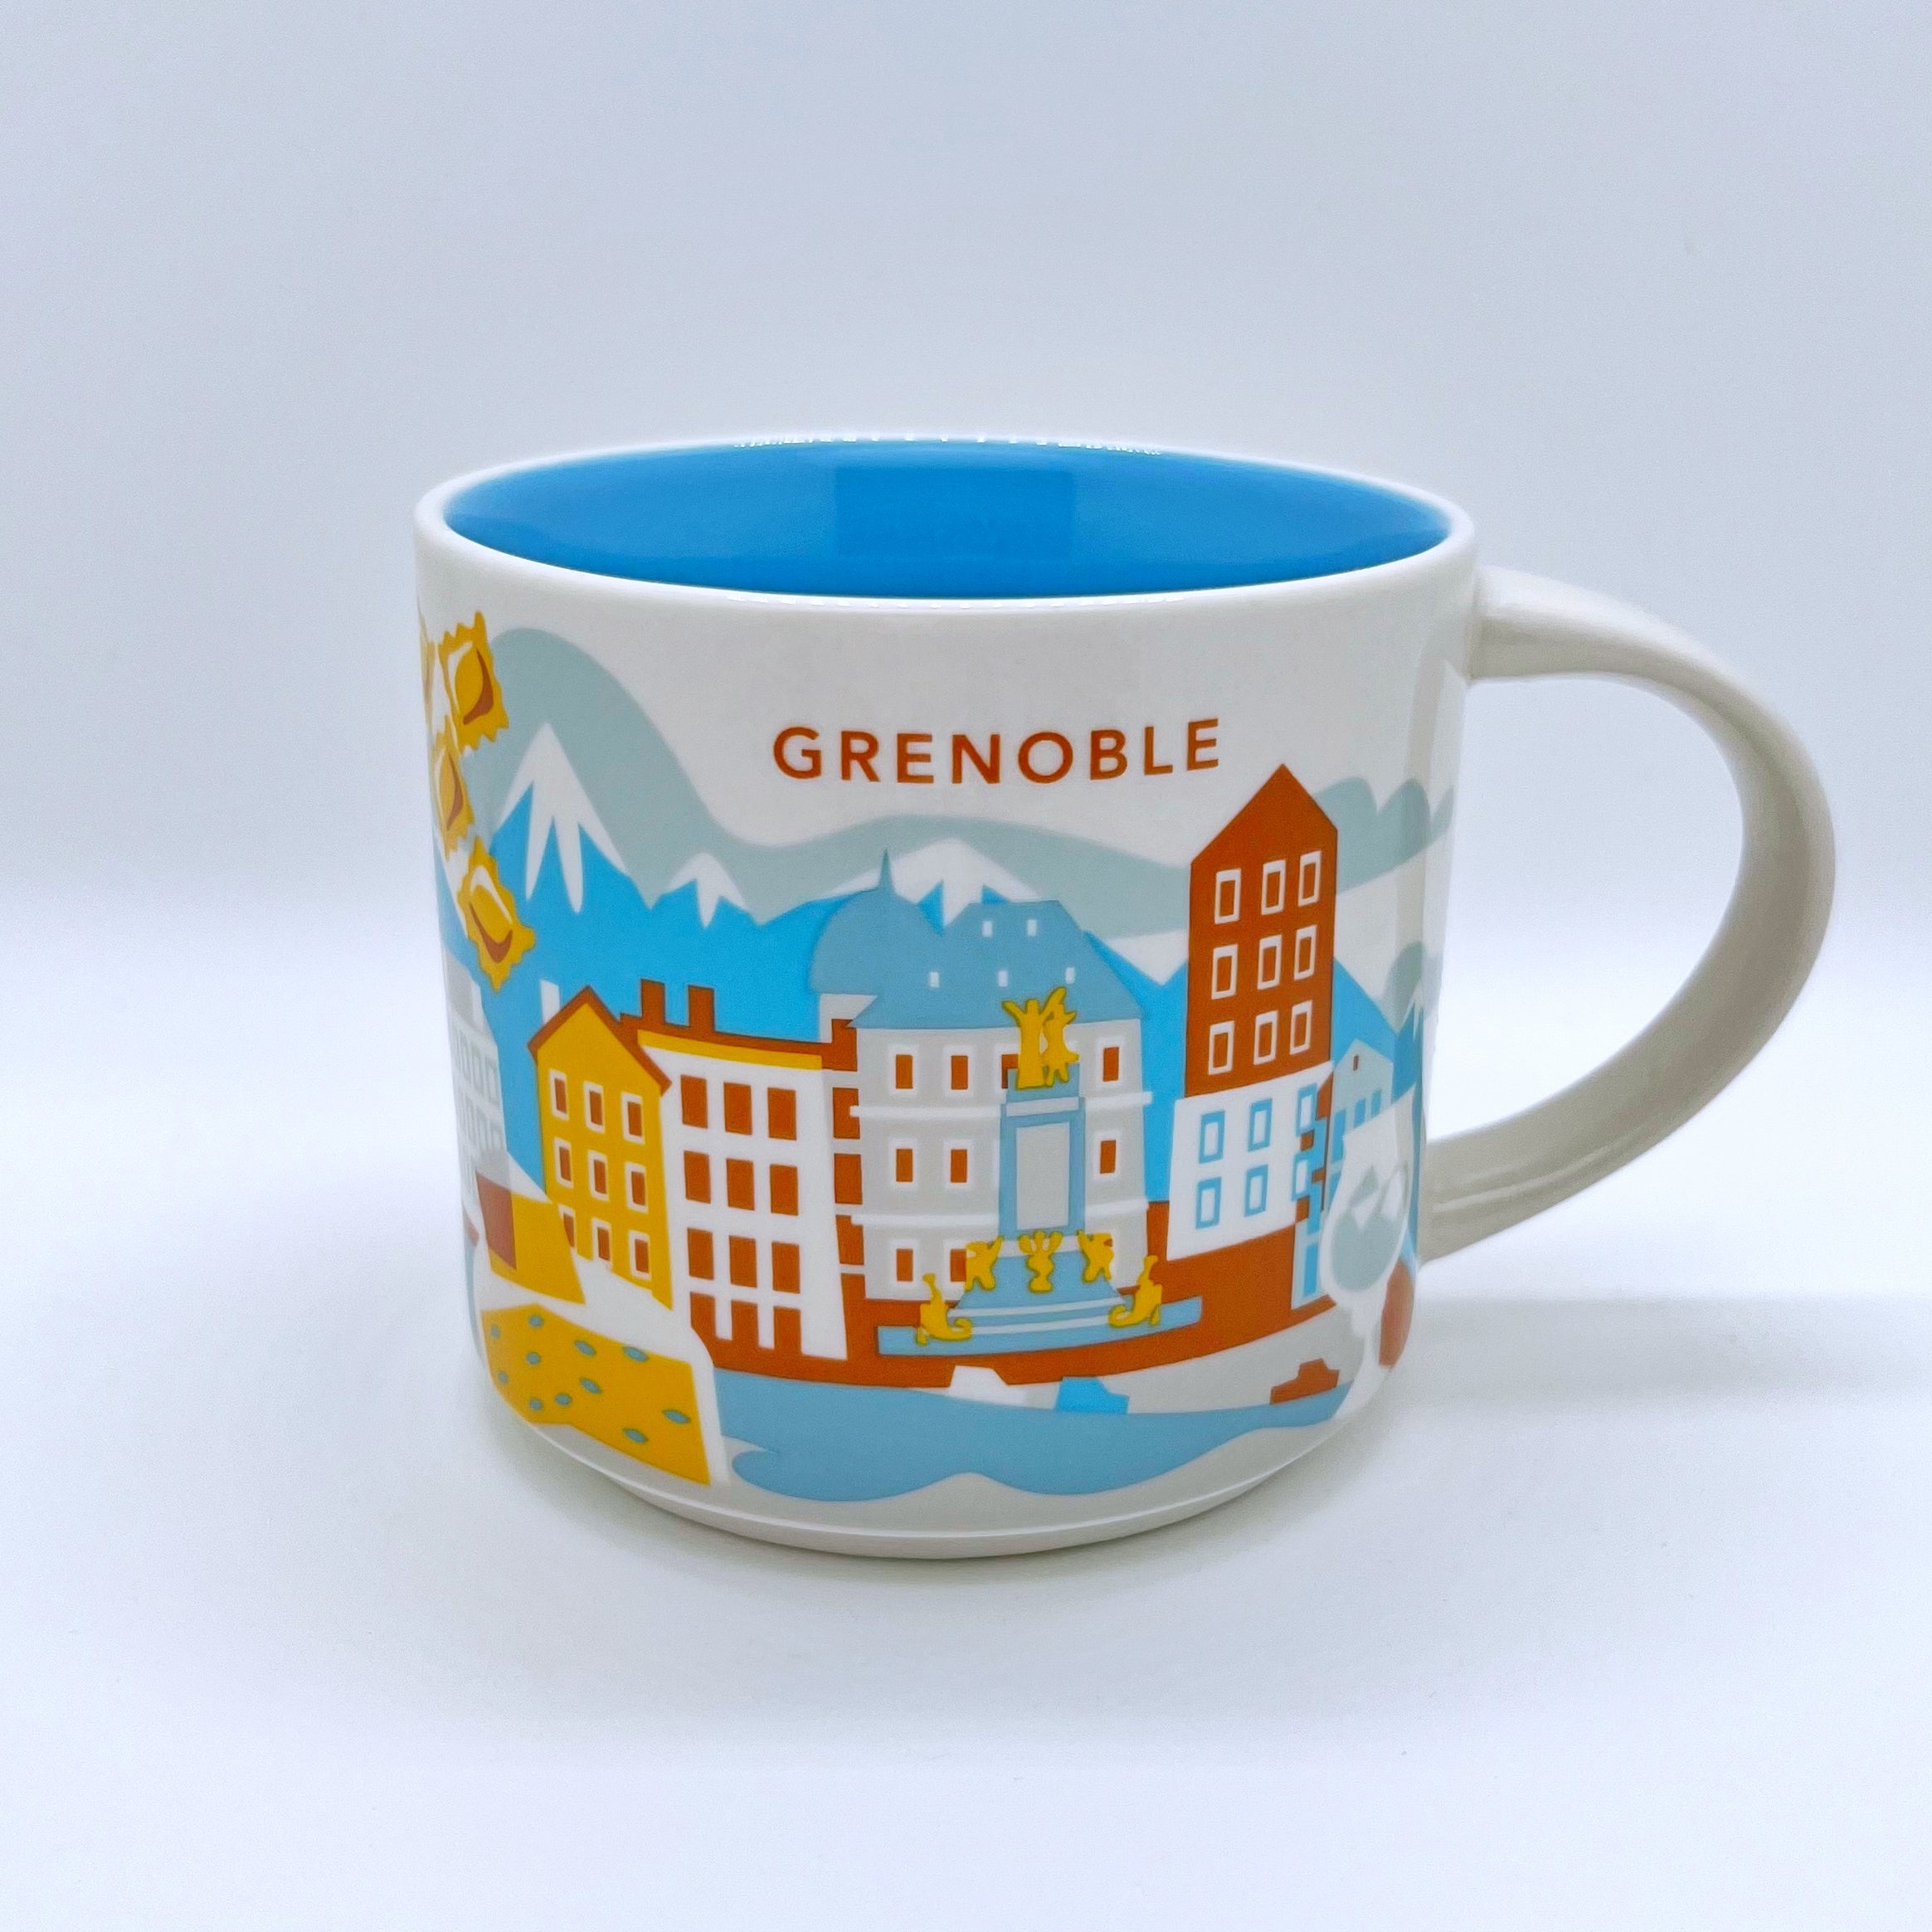 Grenoble City Kaffee Tasse